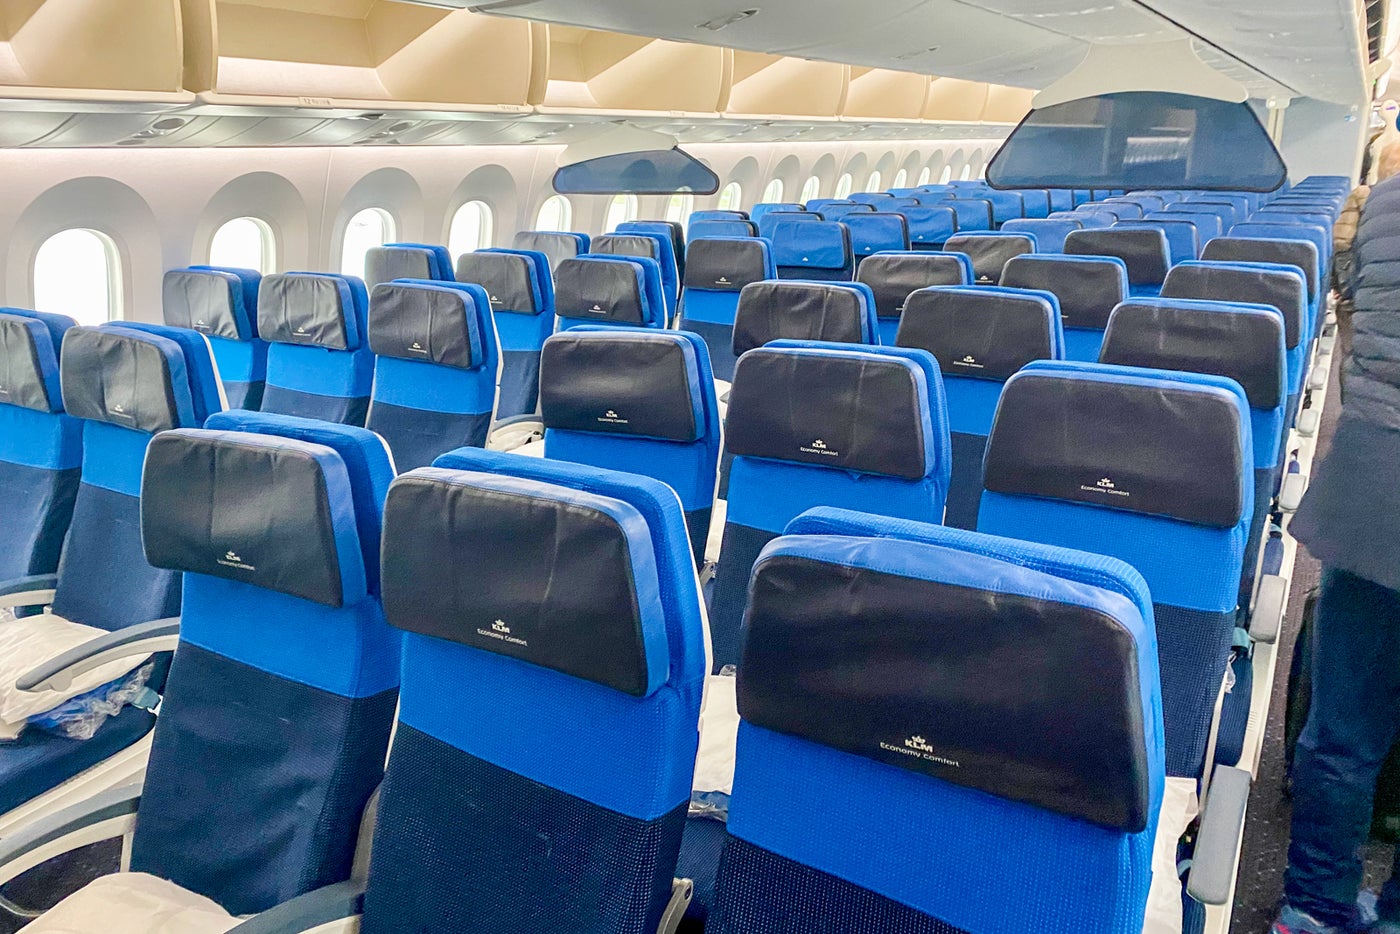 Flight review KLM 7879 in Economy Comfort, AmsterdamNew York